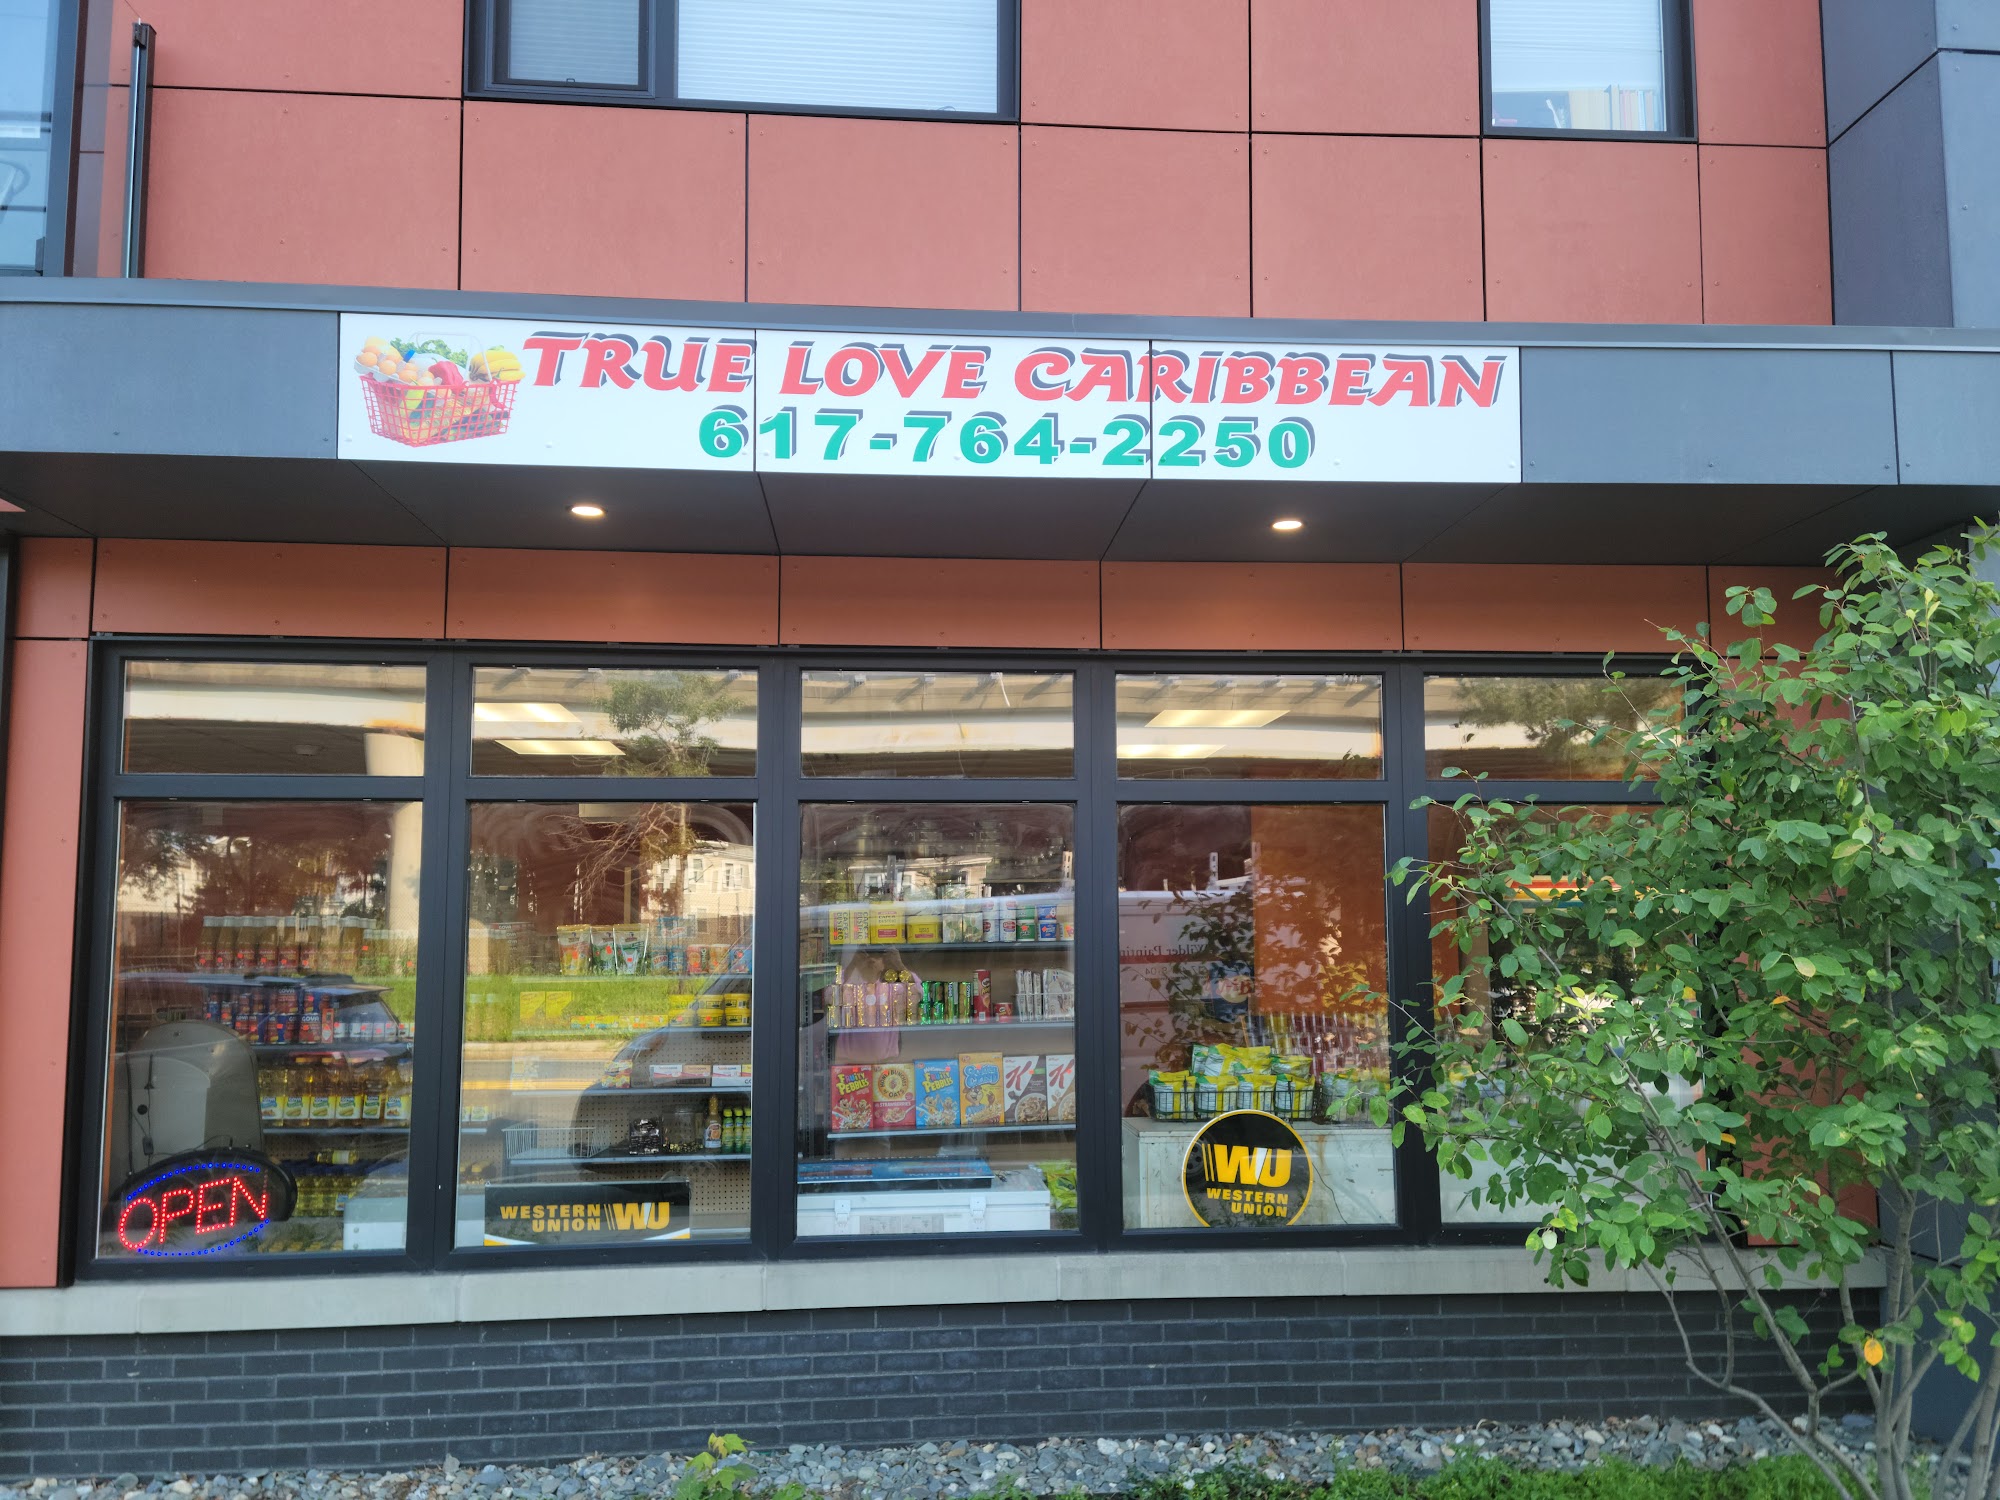 True Love Caribbean Store